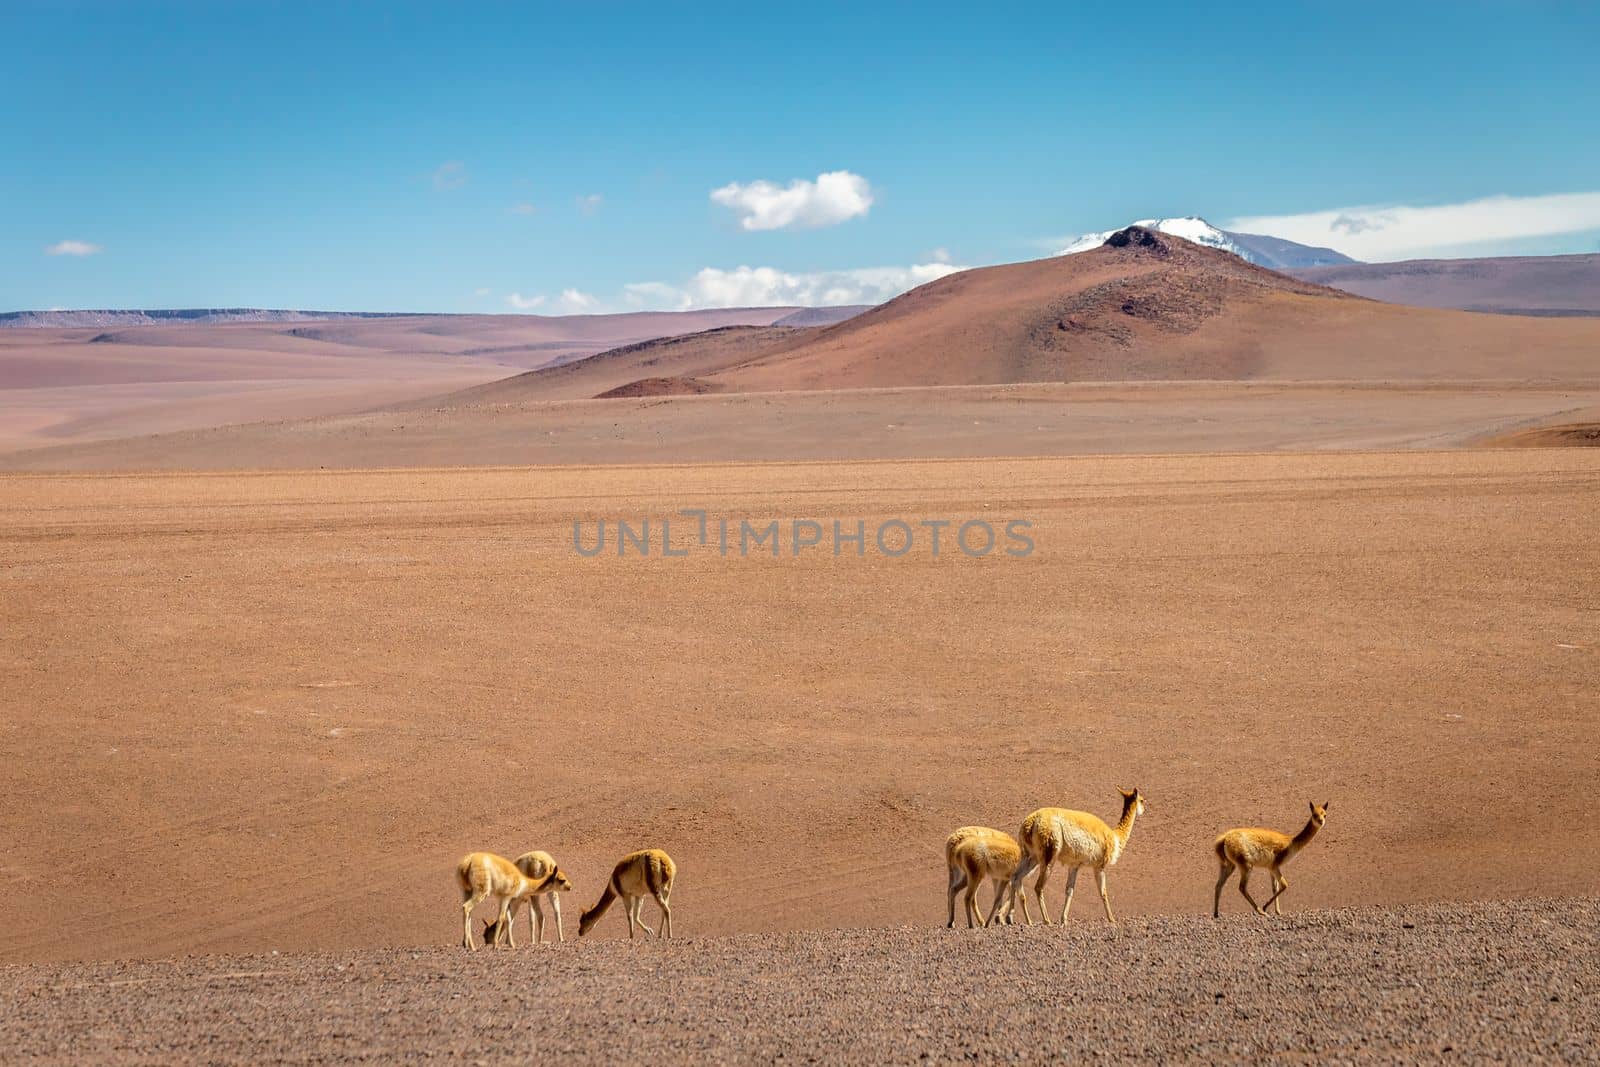 Guanaco vicuna in Bolivia altiplano near Chilean atacama border, South America by positivetravelart